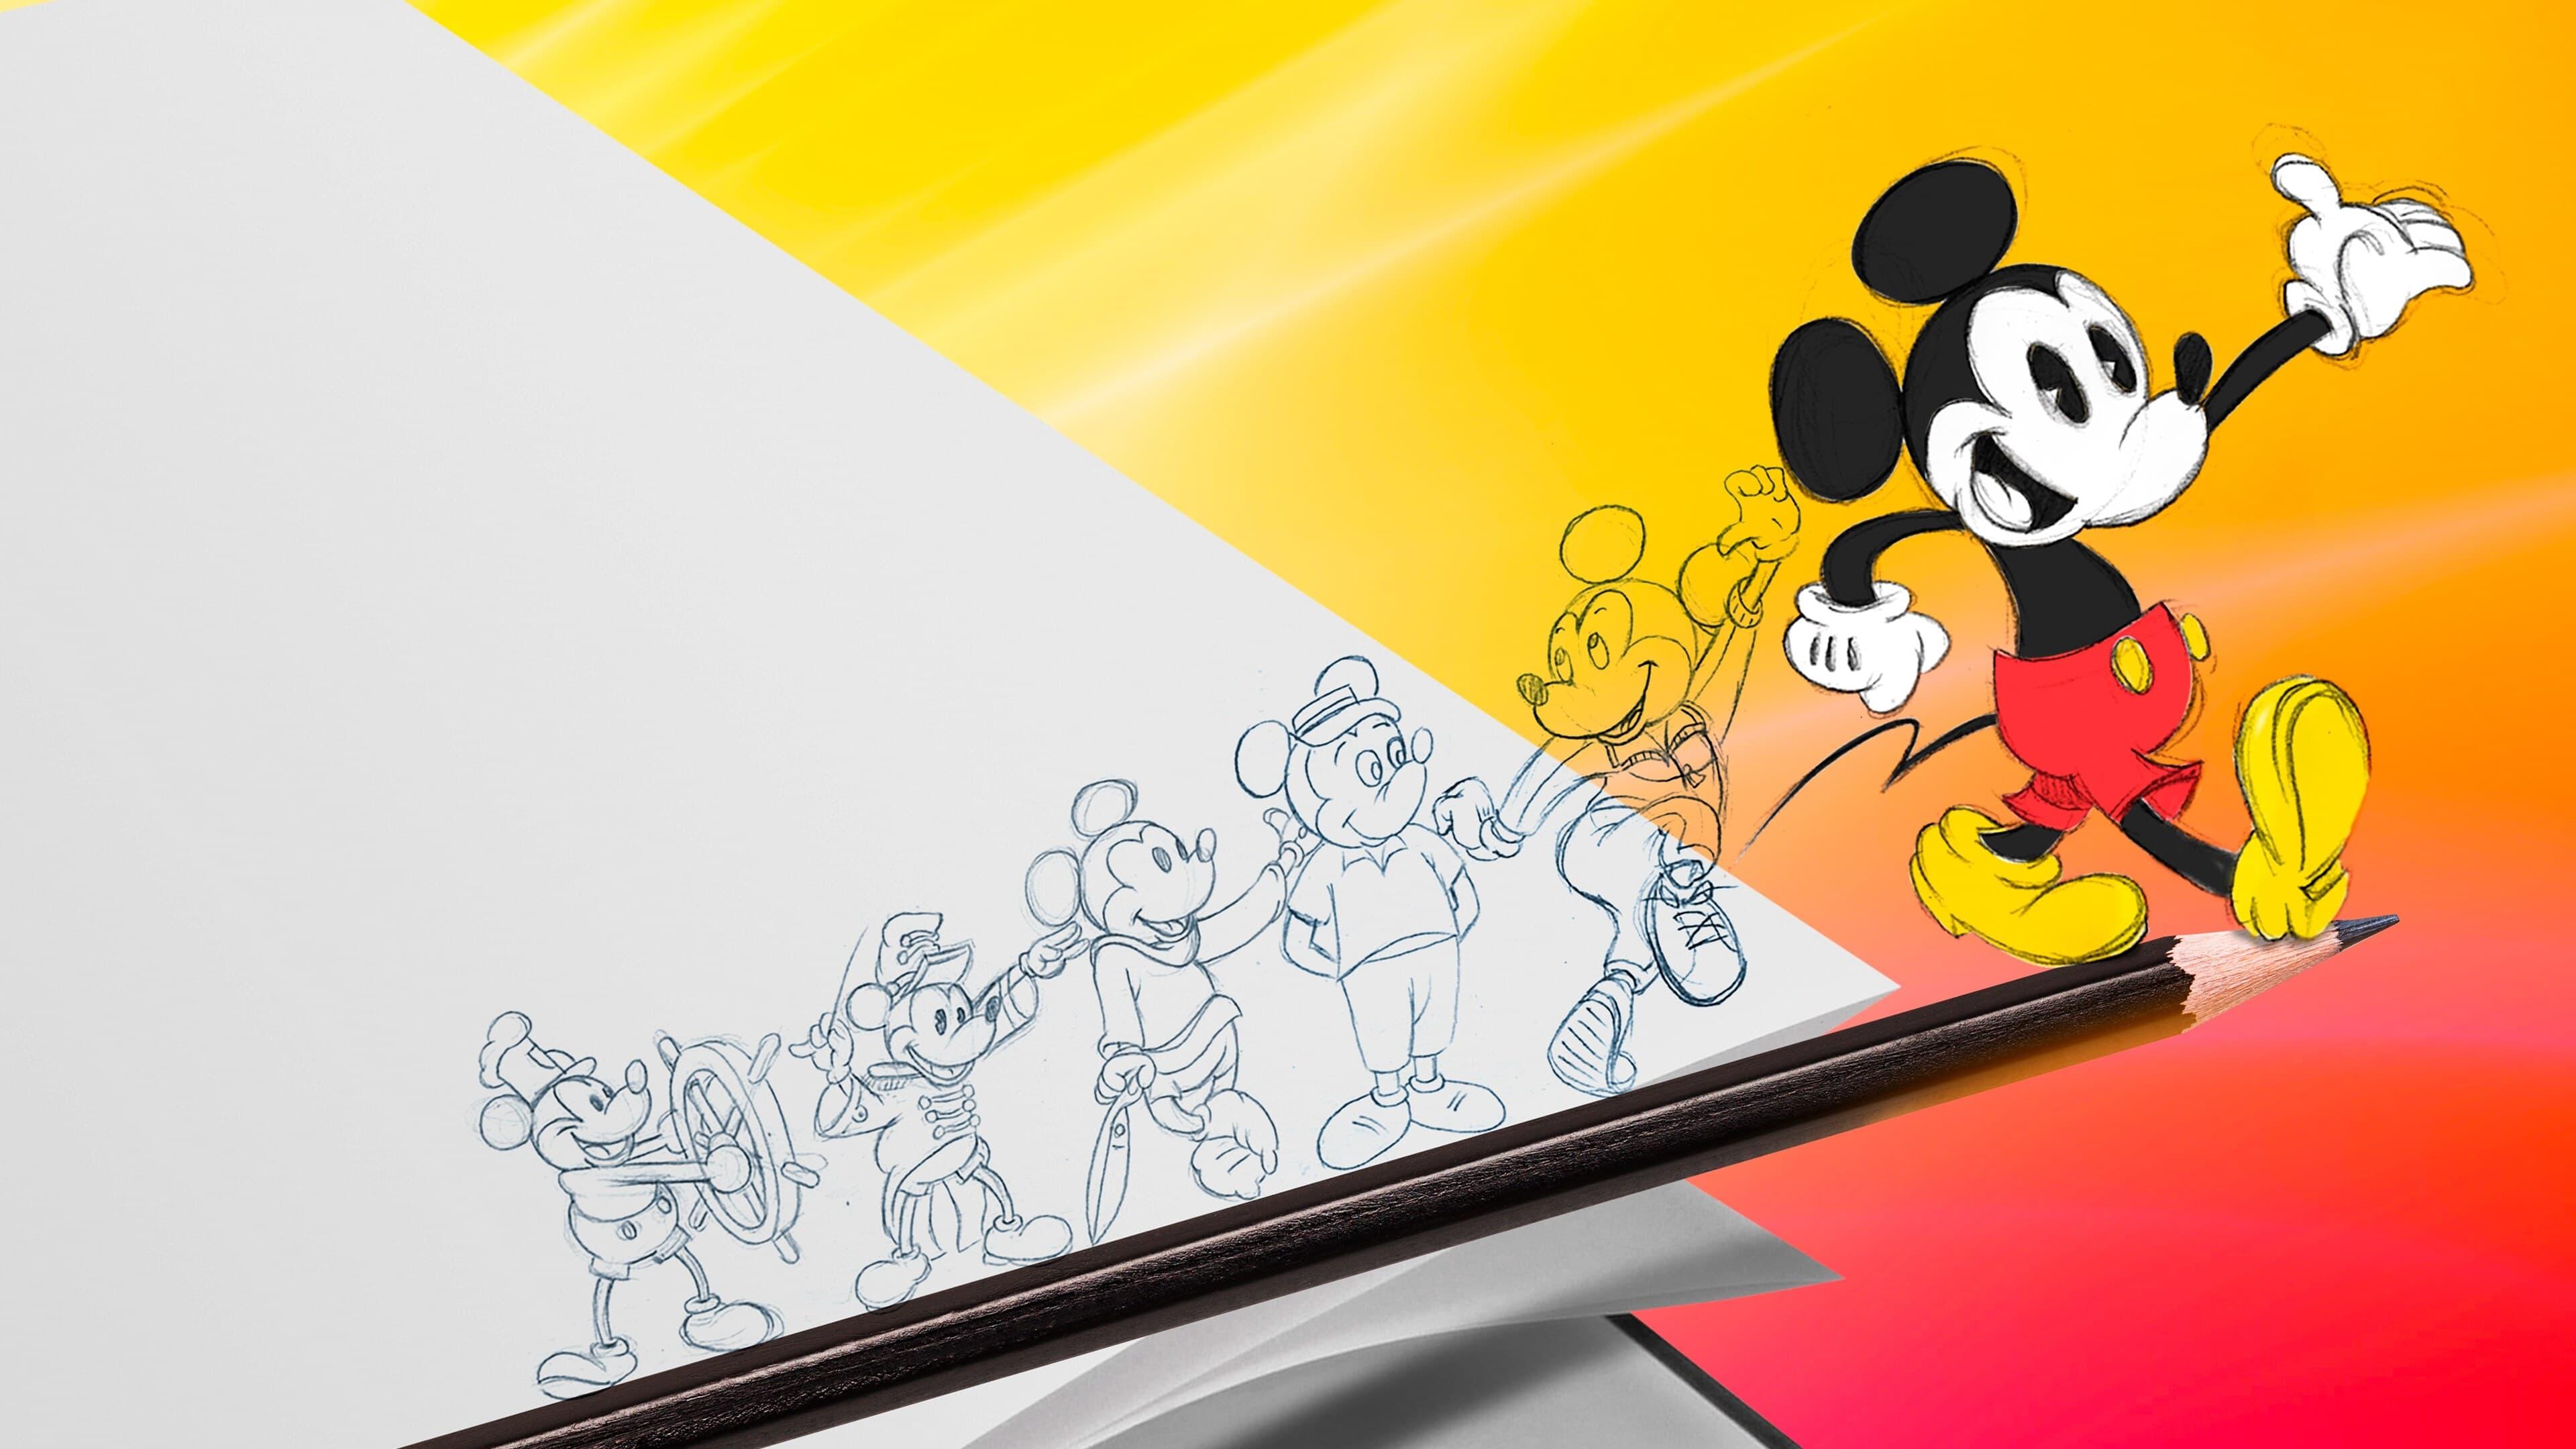 Celebrating Mickey backdrop